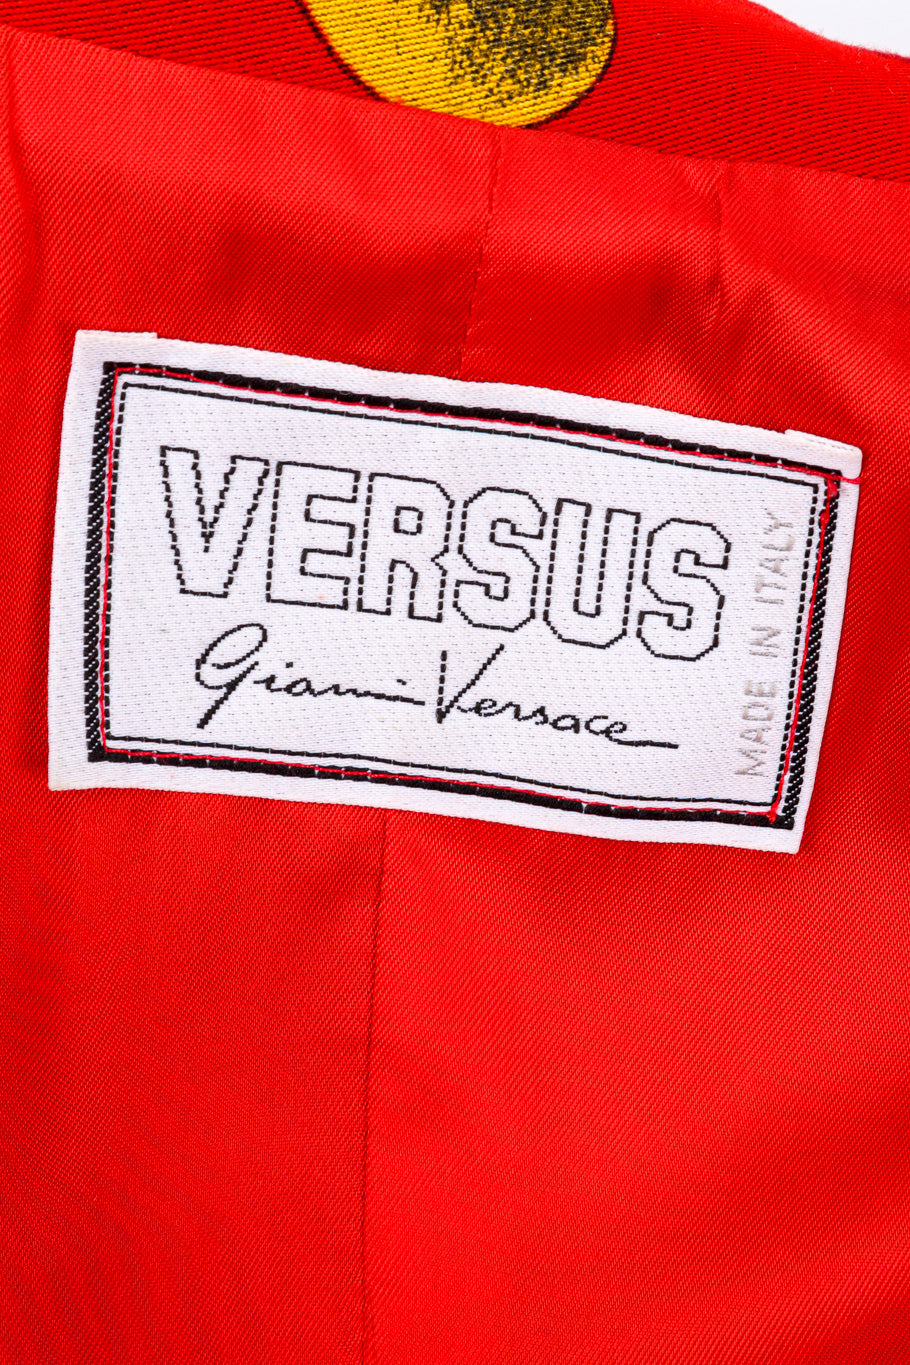 Jacket and shorts set by Versus Versace jacket label @recessla